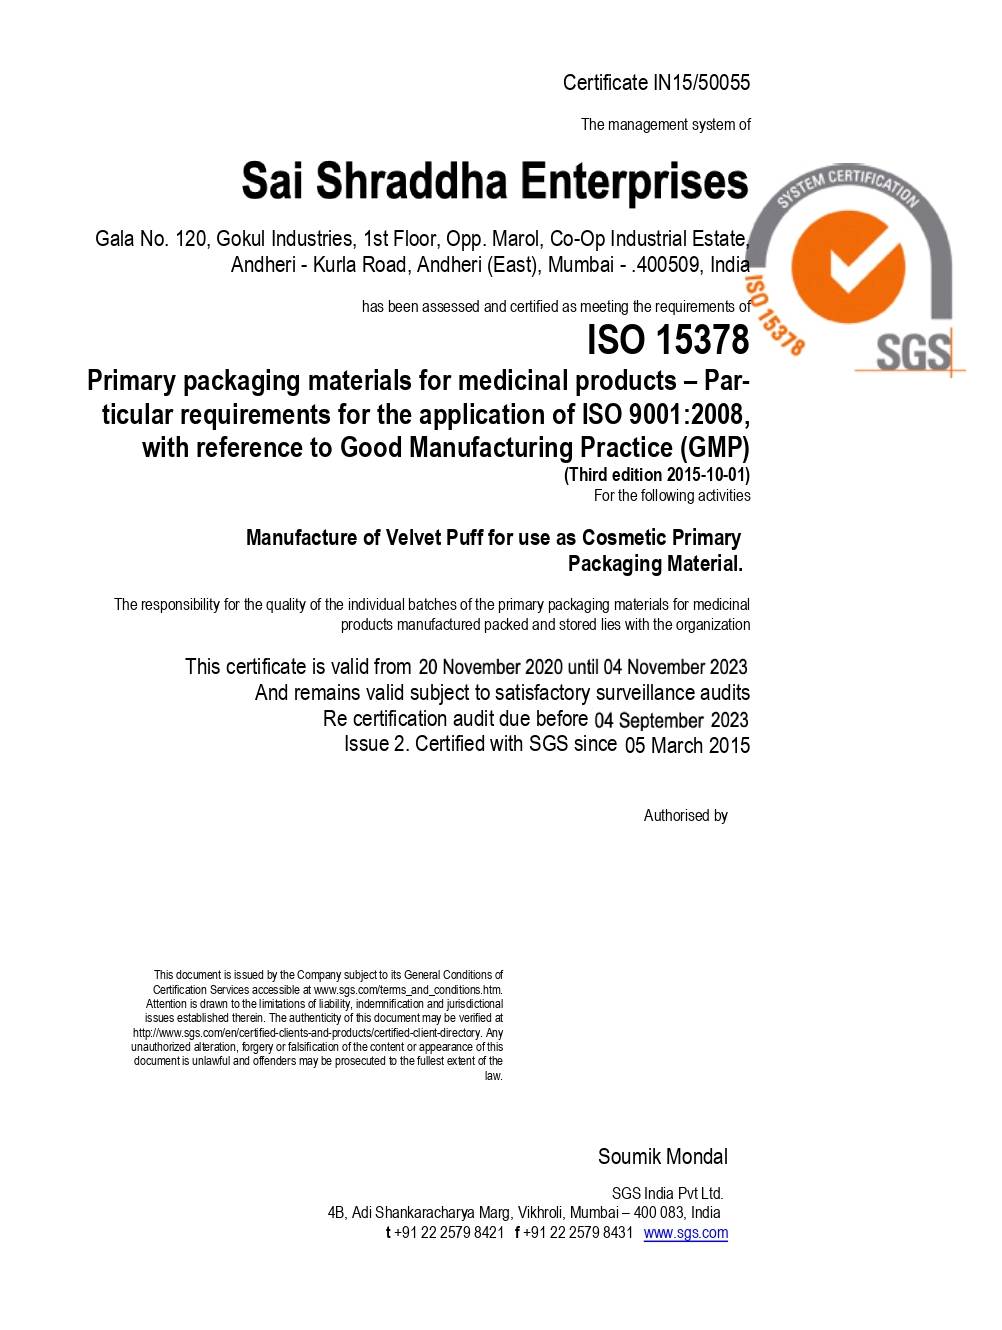 sai shraddha sgs certificate